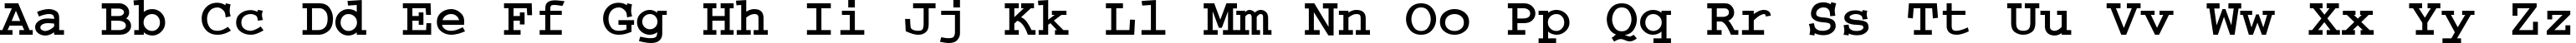 Пример написания английского алфавита шрифтом Courier-Bold